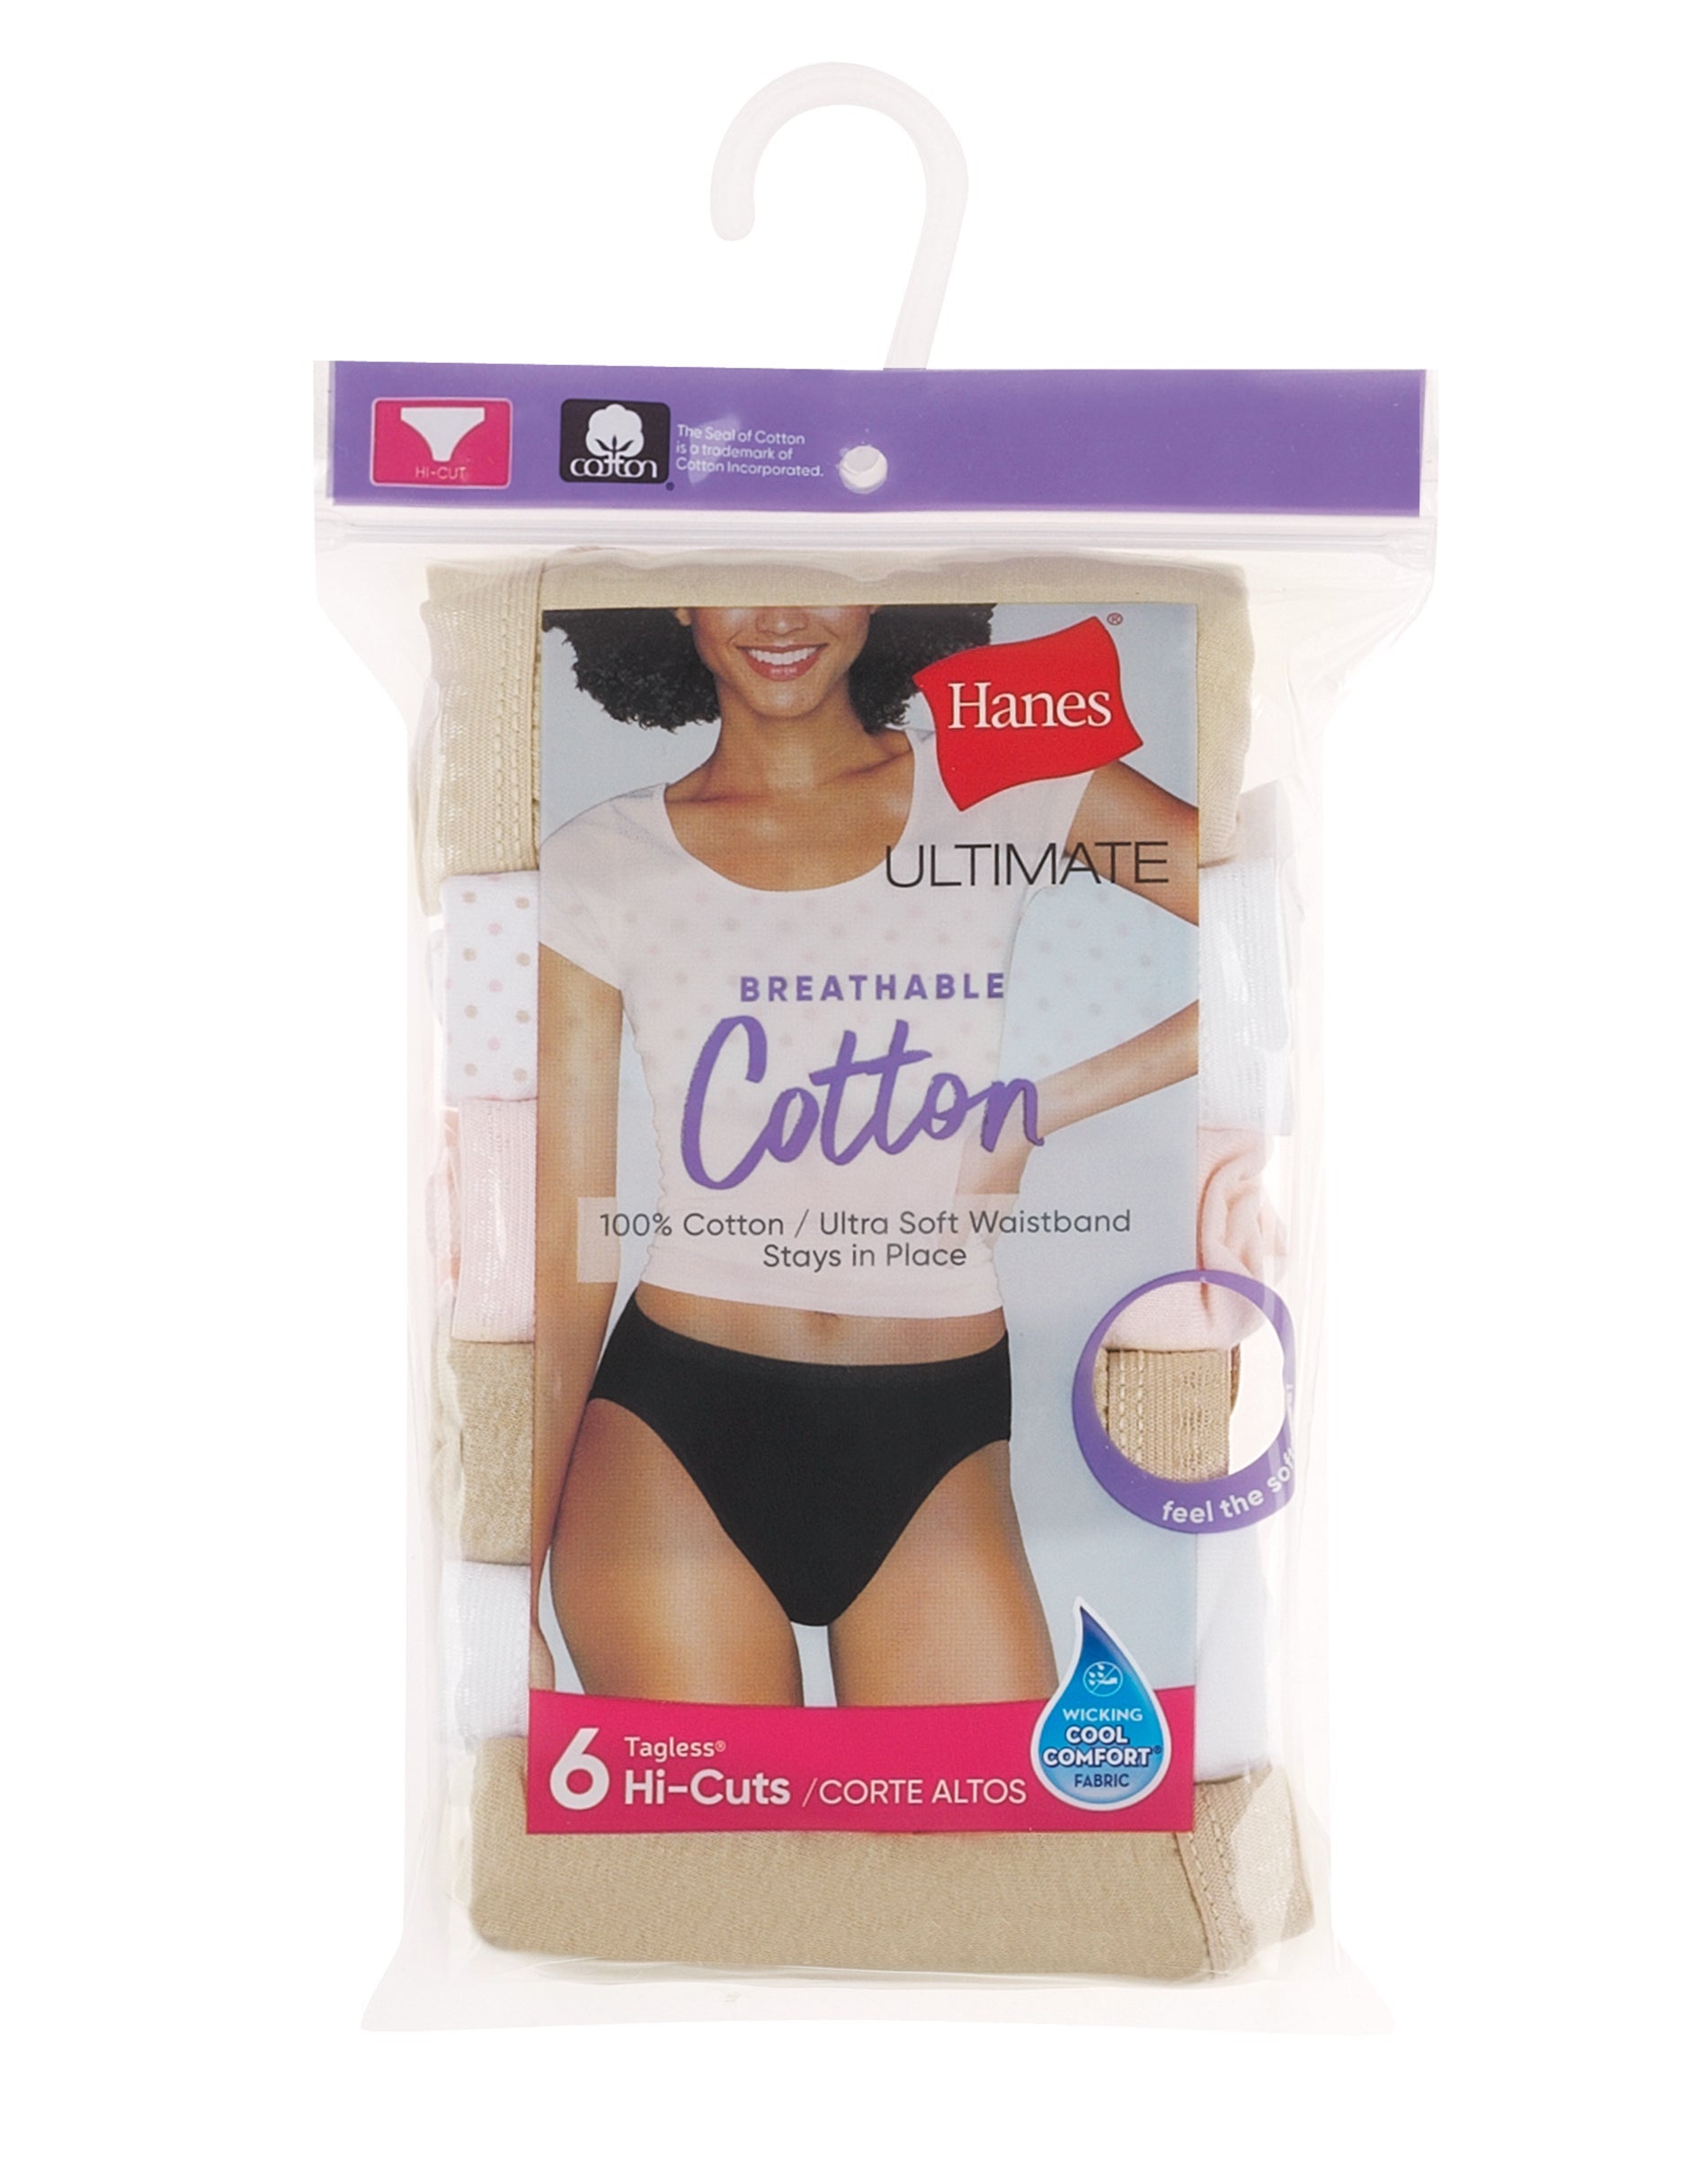 Buy Hanes Women's 10-Pack Cotton Hi-Cut Panty, black, 8 at